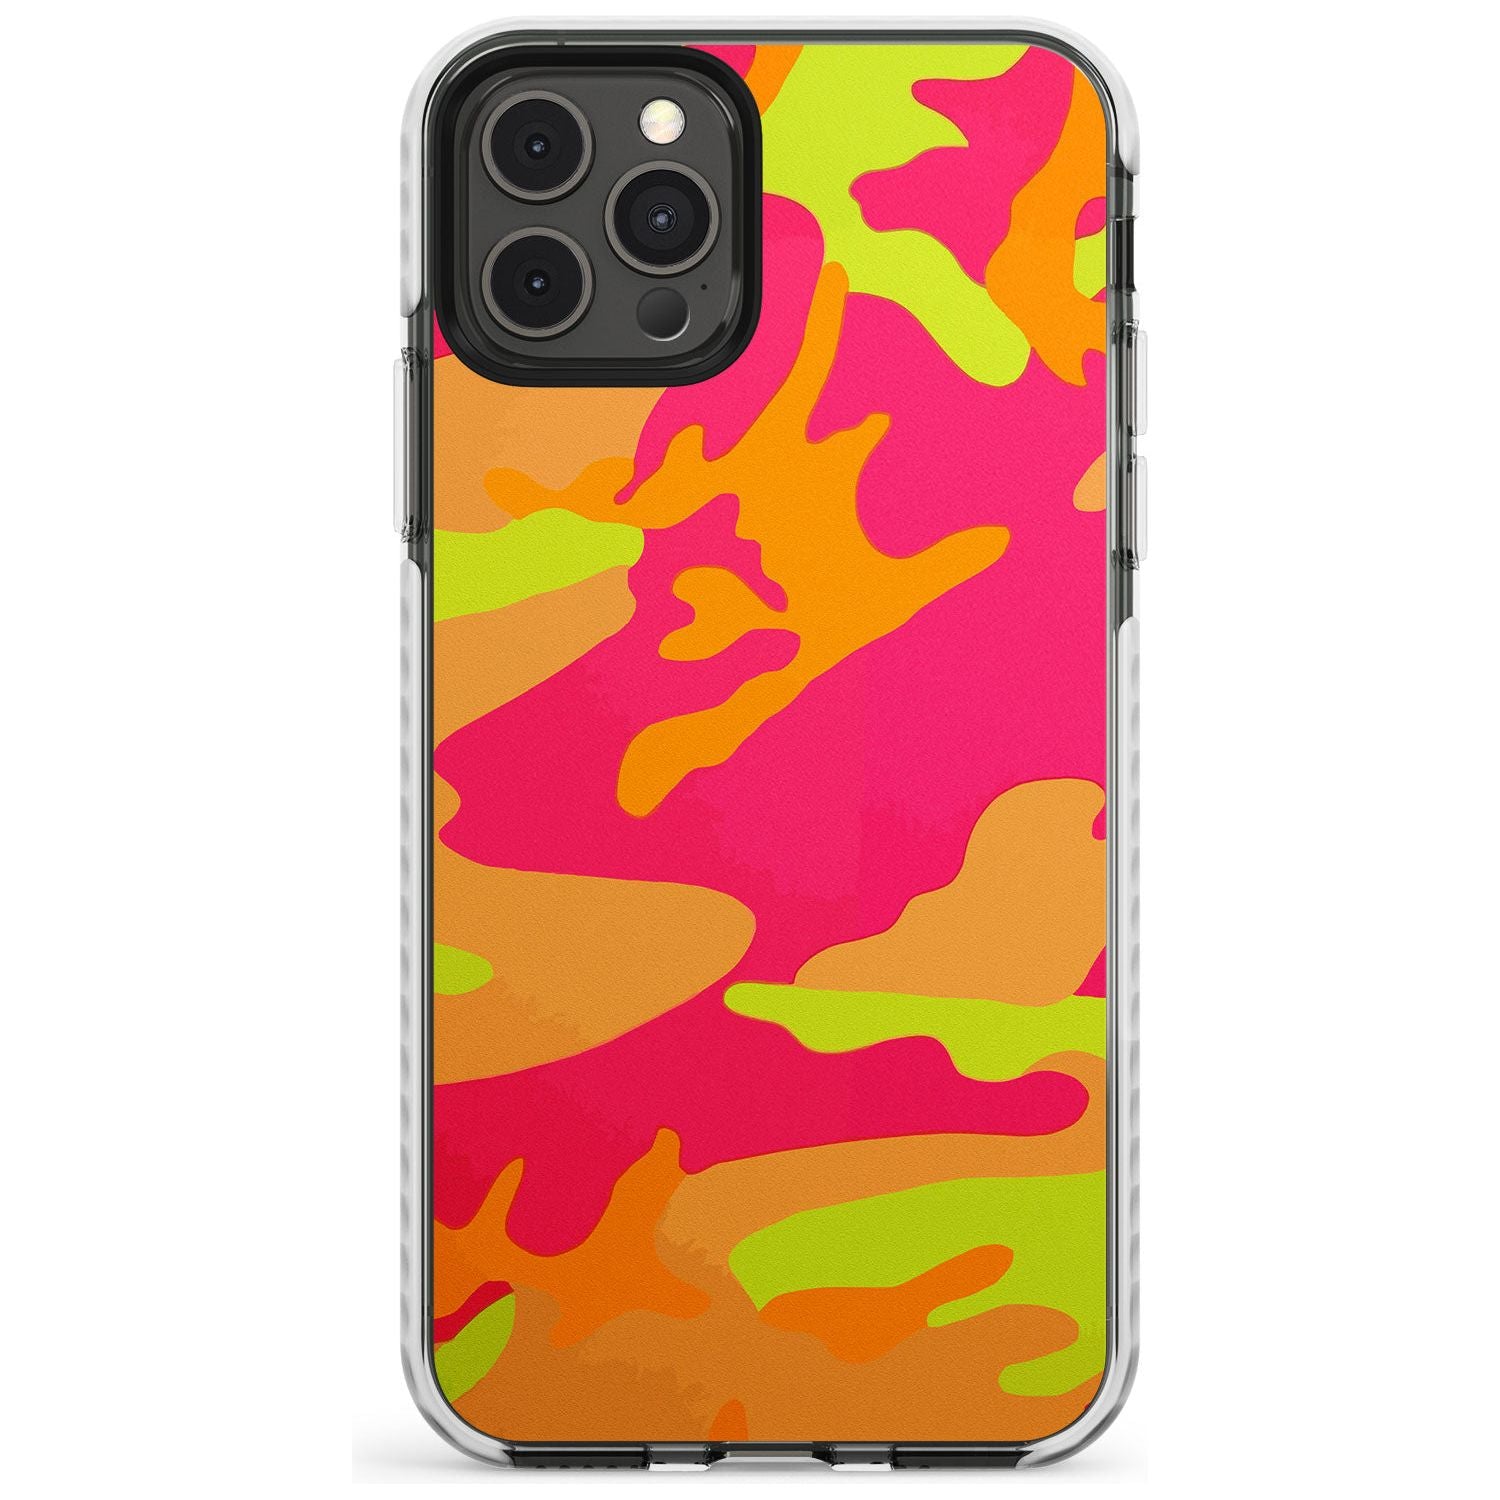 Neon Camo Impact Phone Case for iPhone 11 Pro Max